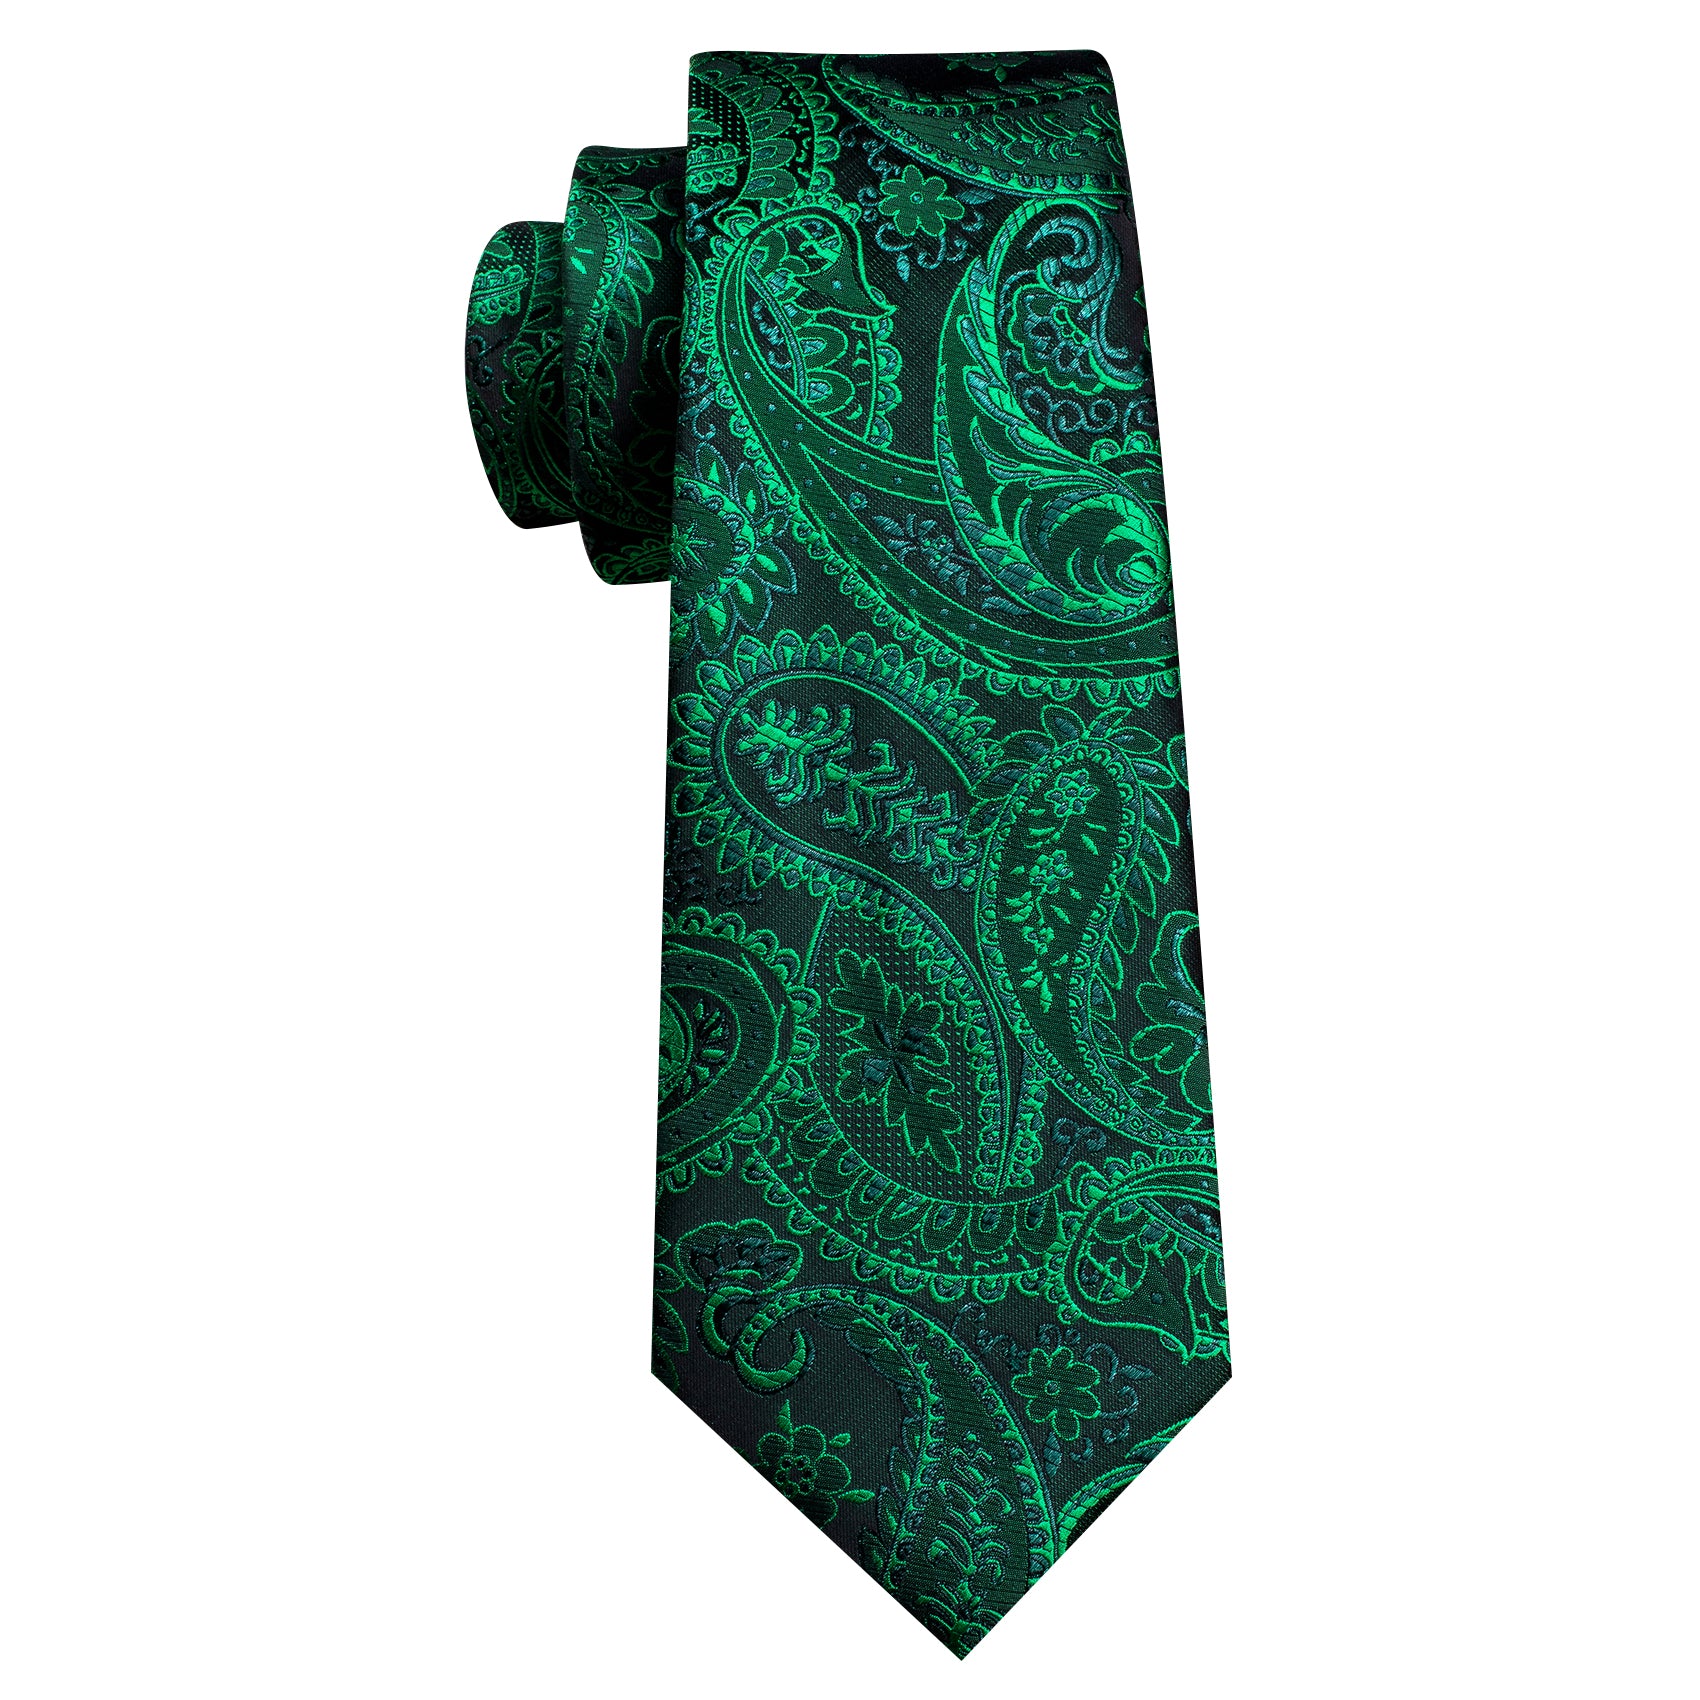 Green Paisley Tie Handkerchief Cufflinks Set